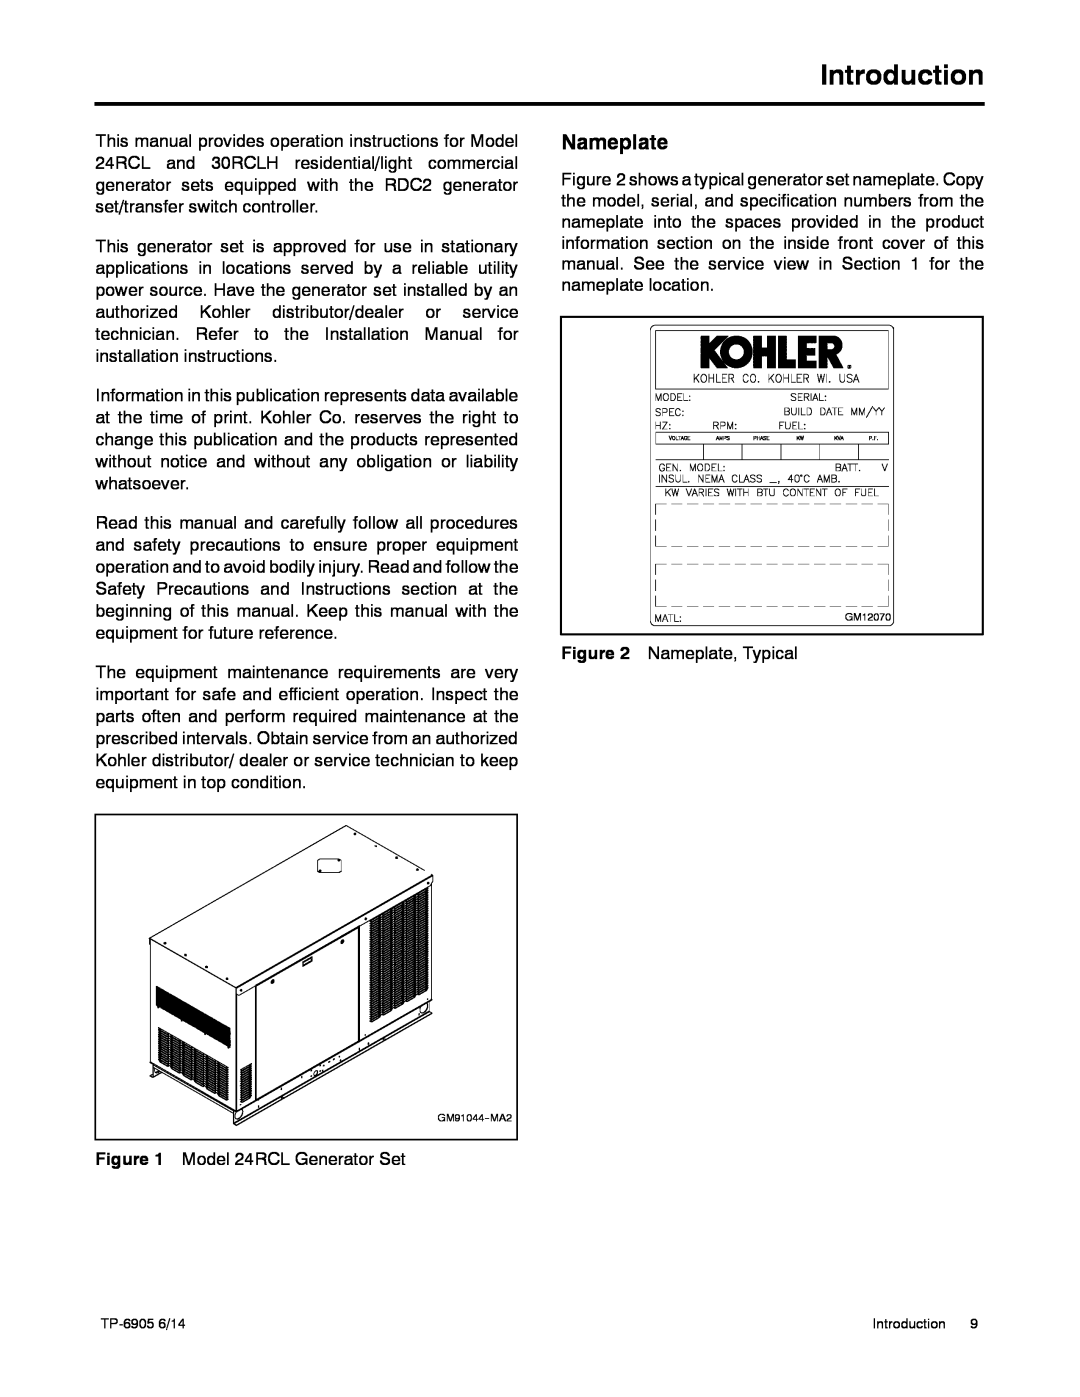 Kohler 24RCL manual Introduction, Nameplate 